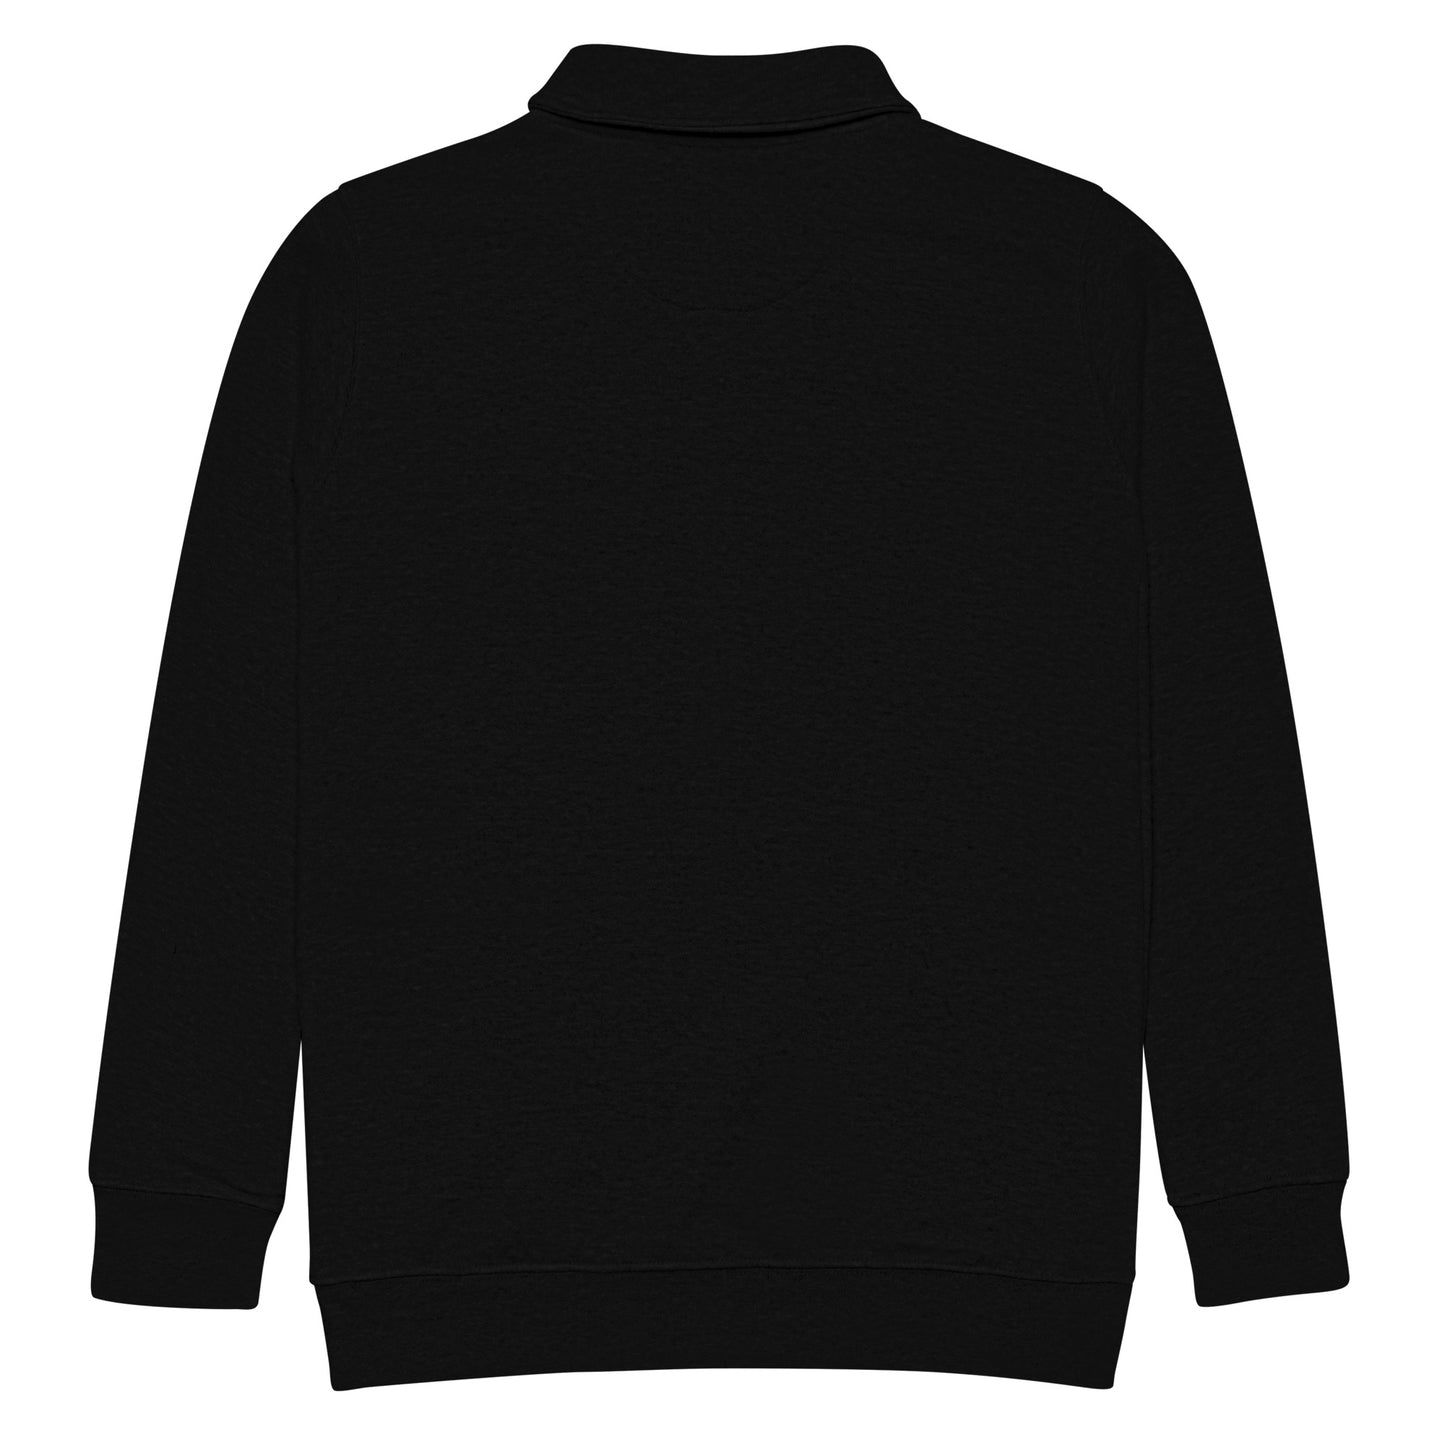 Personalized Teacher Fleece pullover